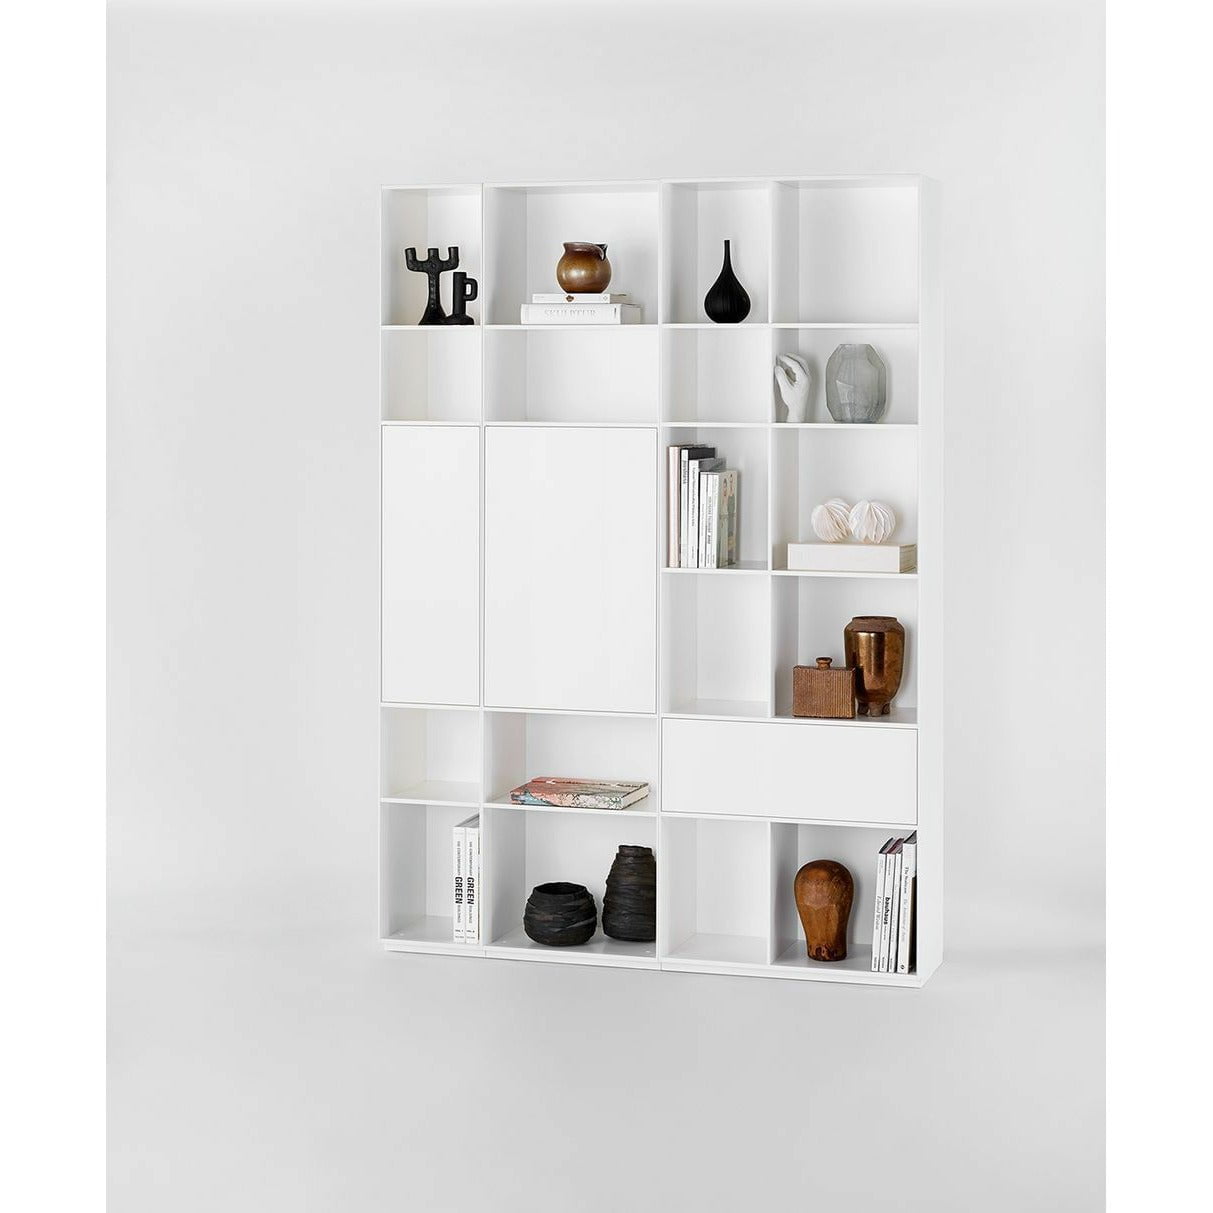 Piure Nex Pur Shelf Door Top With Shelf, Hx W 211,5x30 Cm